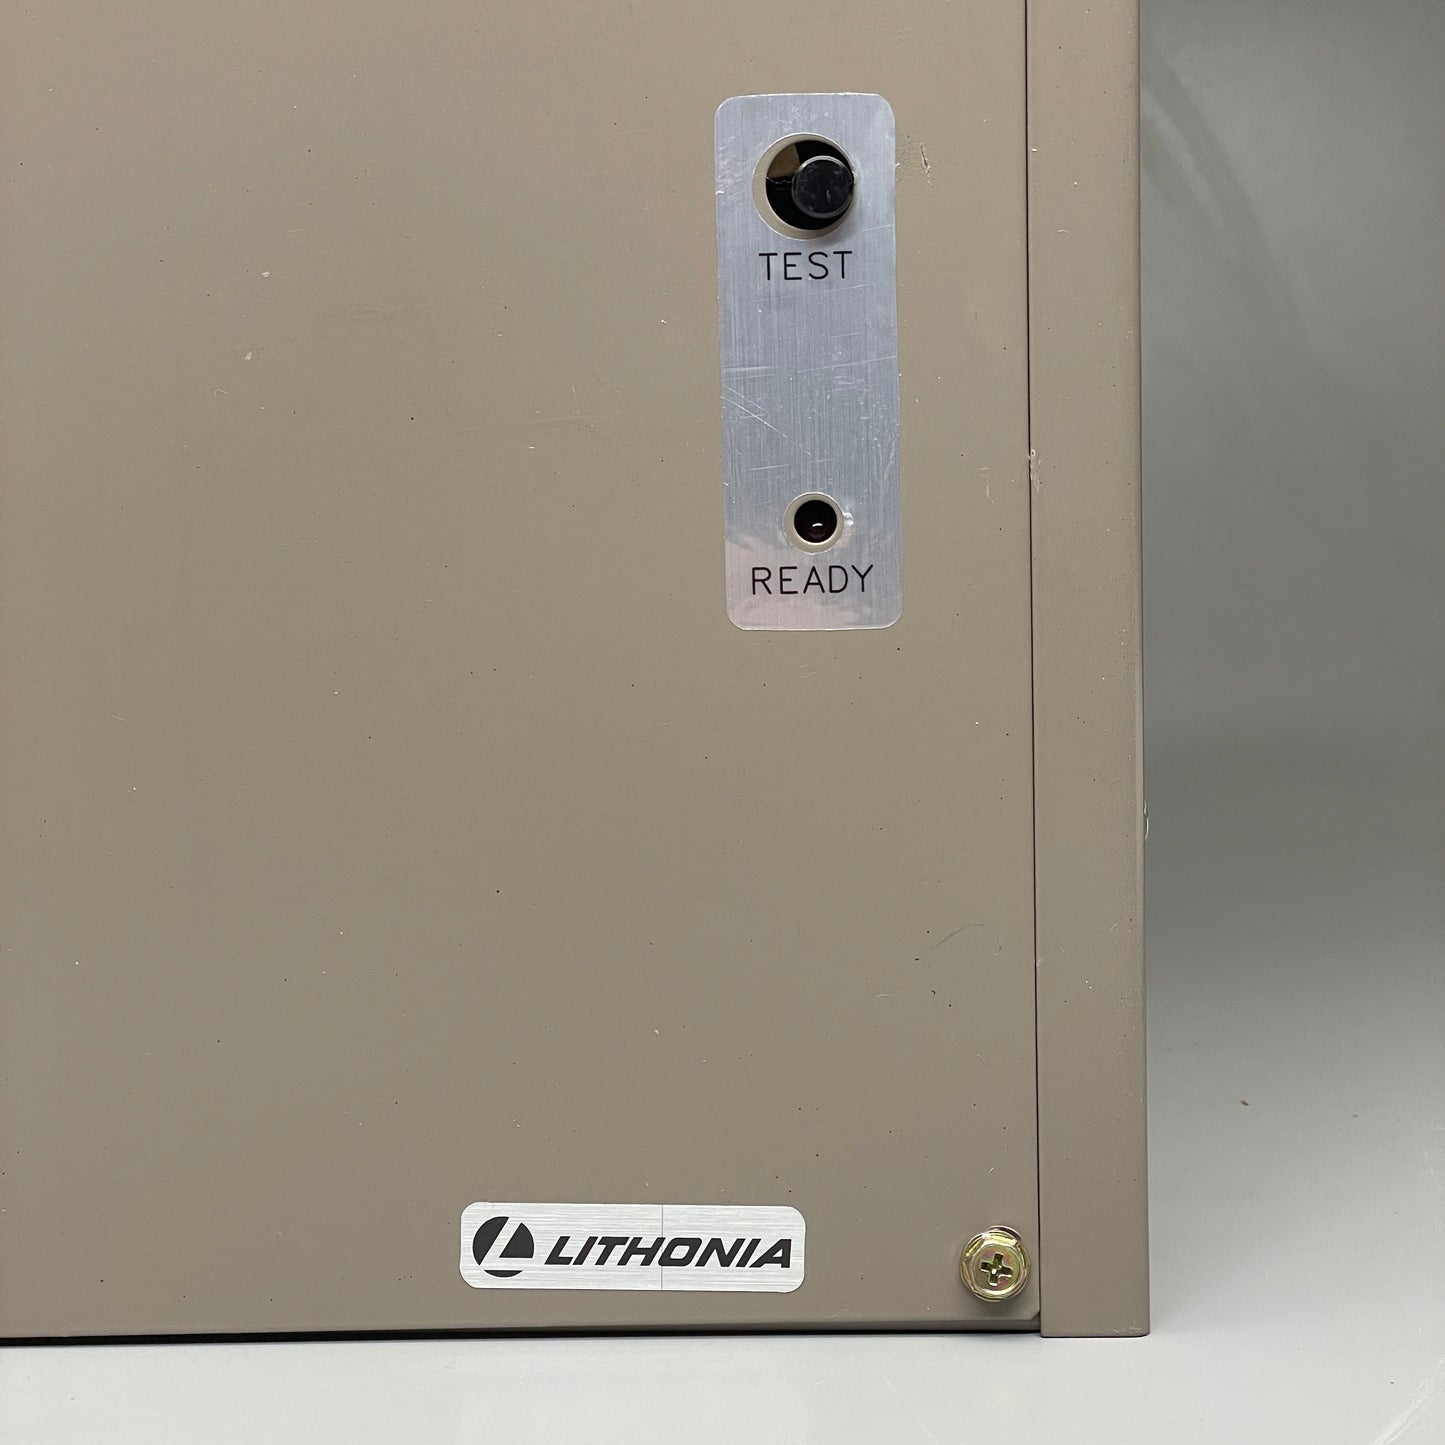 LITHONIA Titan Series Die-formed Steel Emergency Lighting Unit ELT125LB MT H5012 (New)